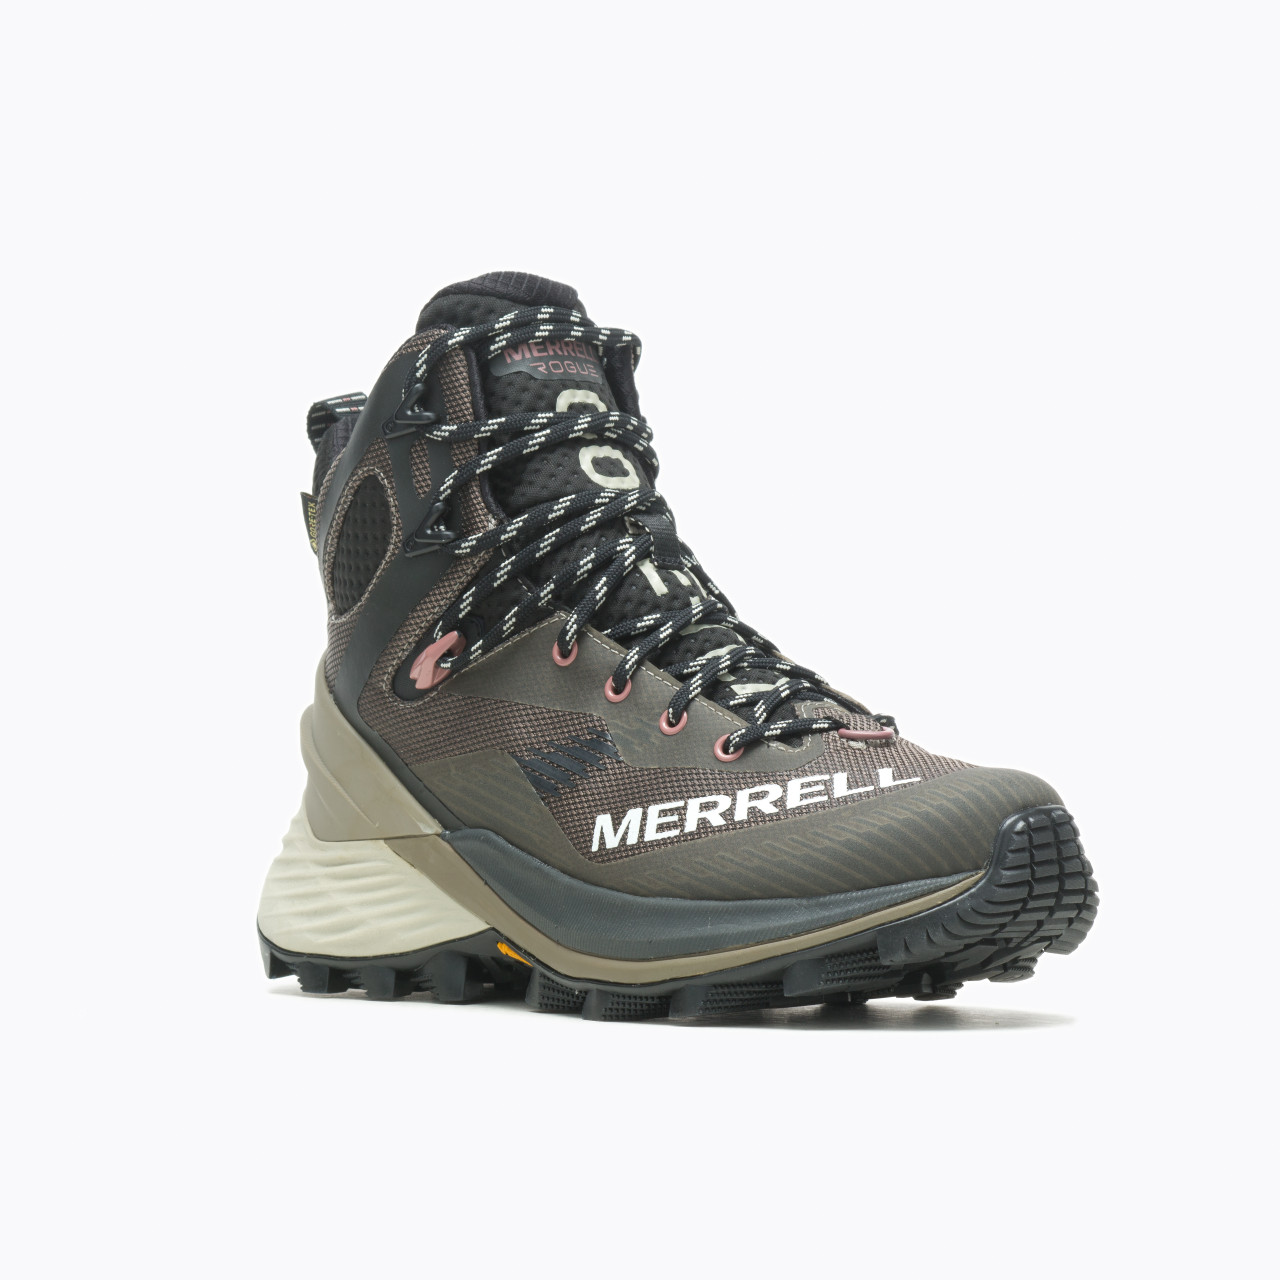 Merrell GORE-TEX Women's Hiking Footwear